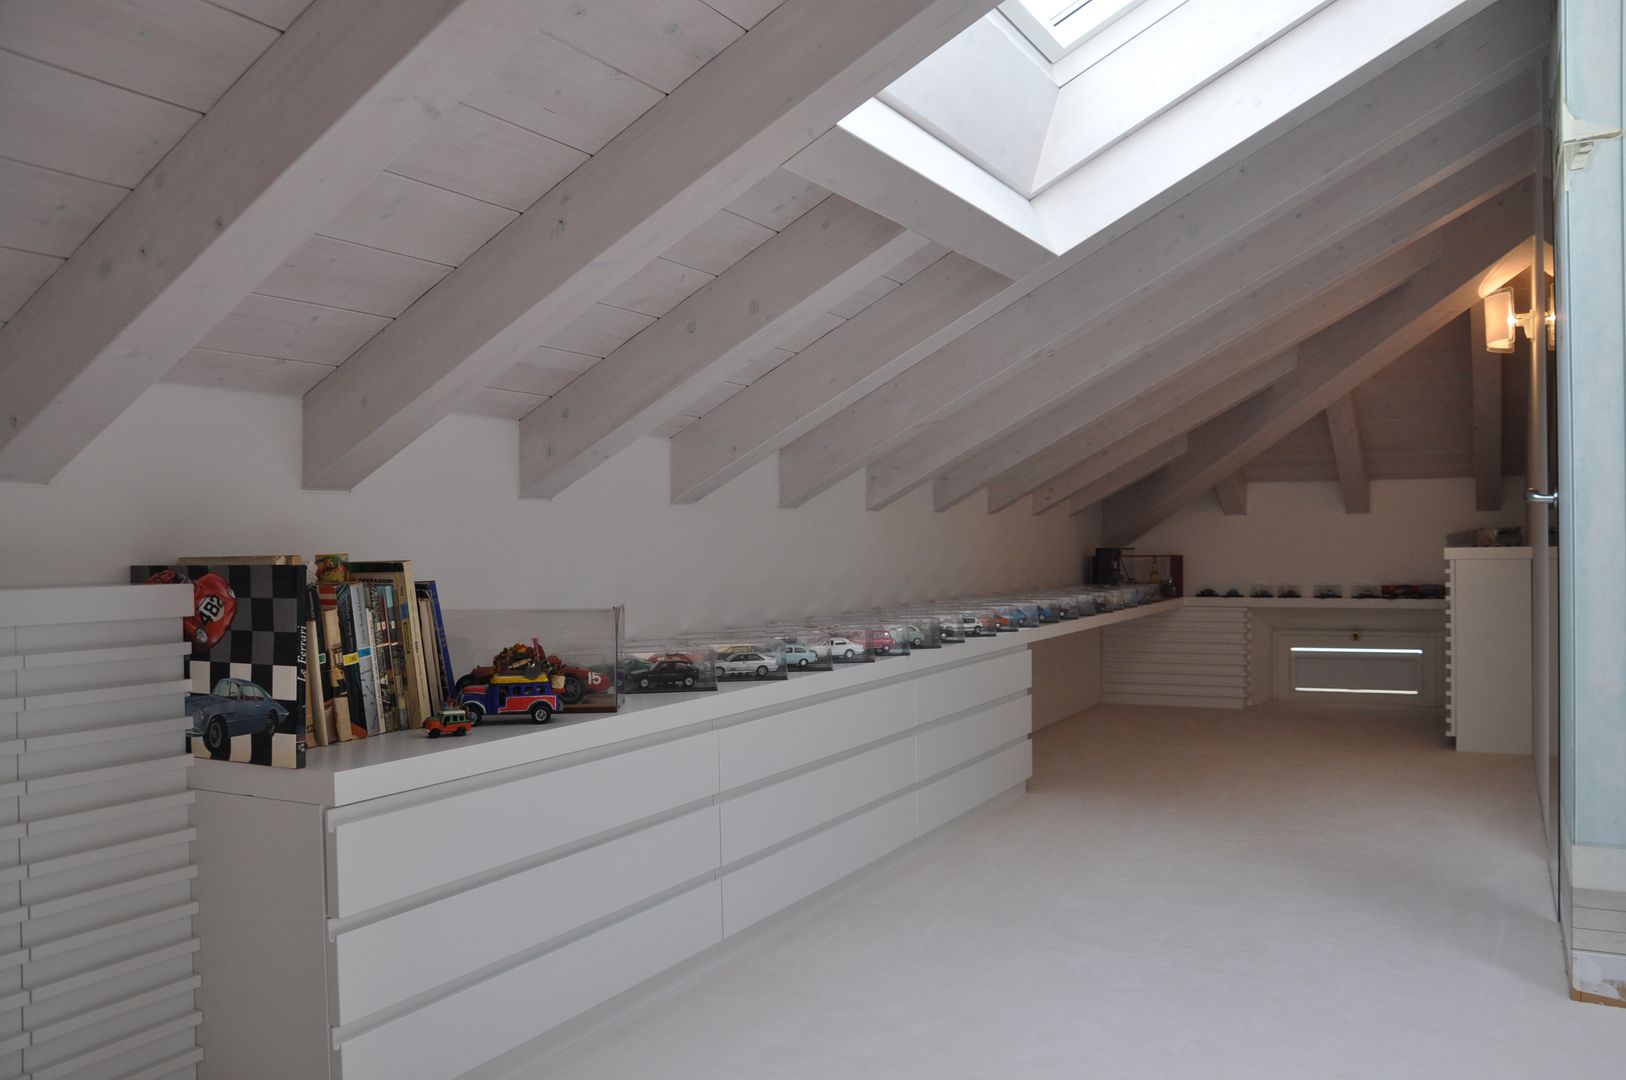 Renovation and interior design attic, F_Studio+ dell'Arch. Davide Friso F_Studio+ dell'Arch. Davide Friso Modern style bedroom